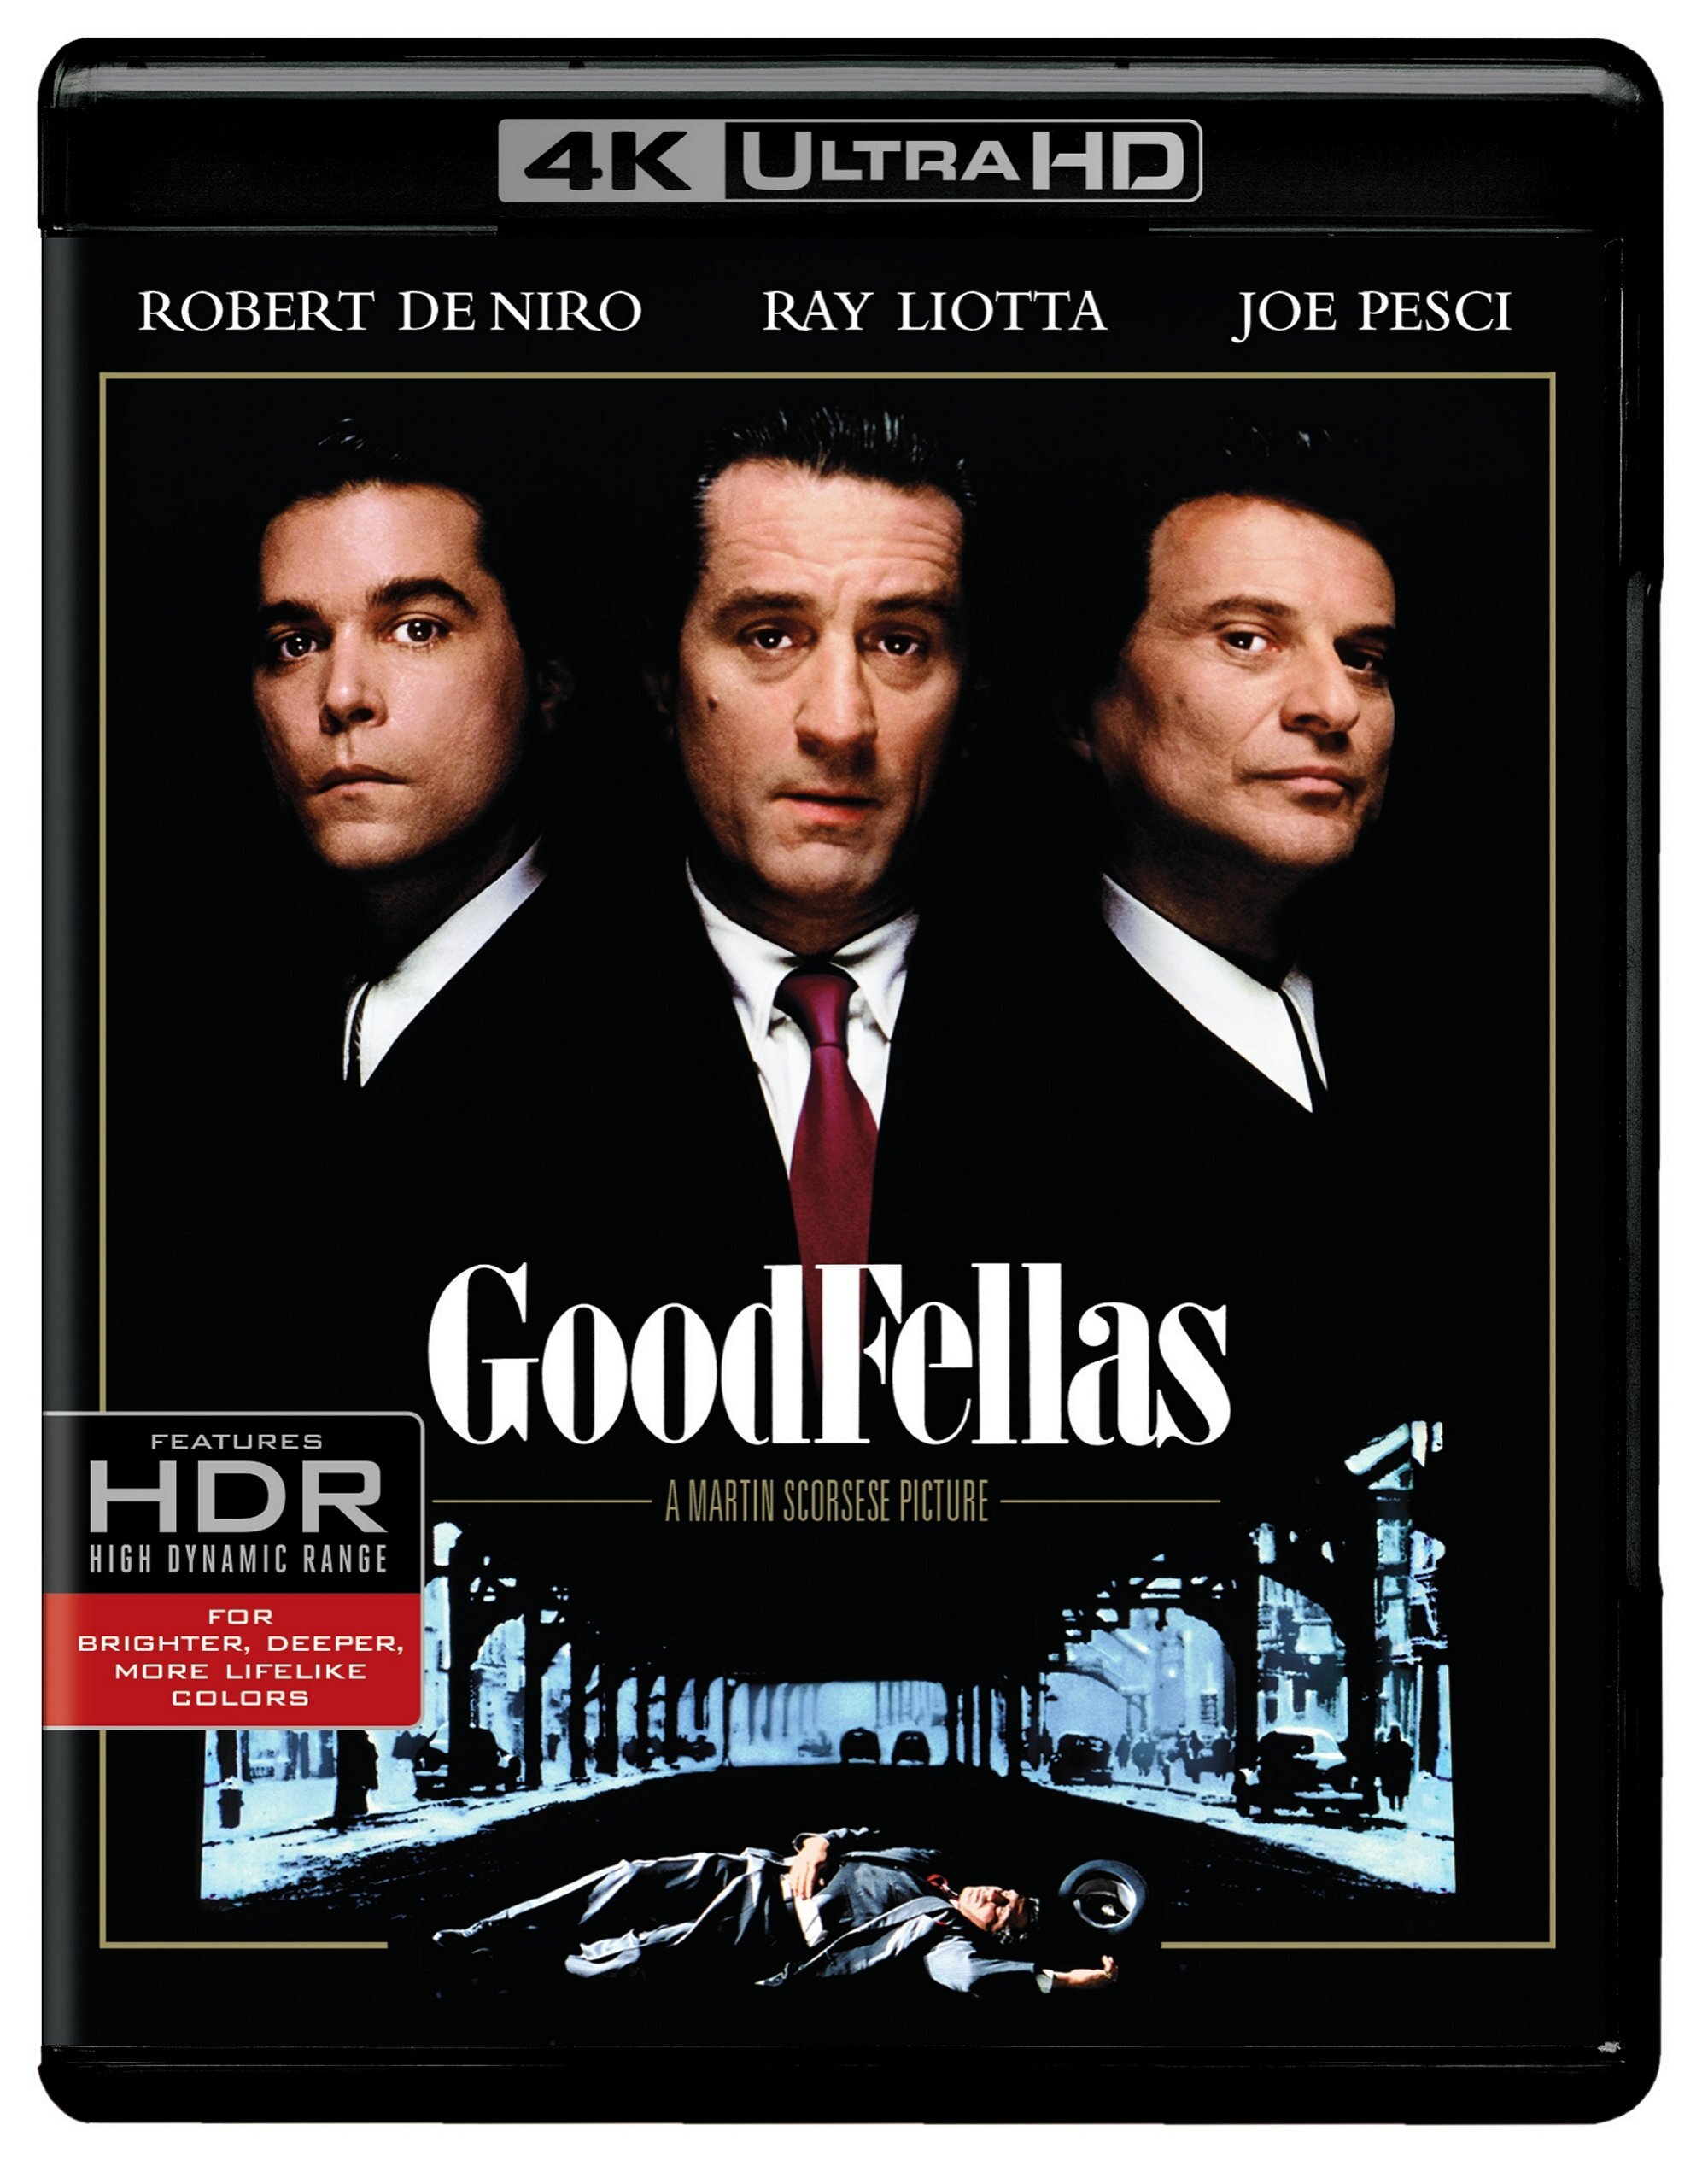 Goodfellas (4K Ultra HD + Blu-ray) - UHD [ 1990 ]  - Thriller Movies On 4K Ultra HD Blu-ray - Movies On GRUV